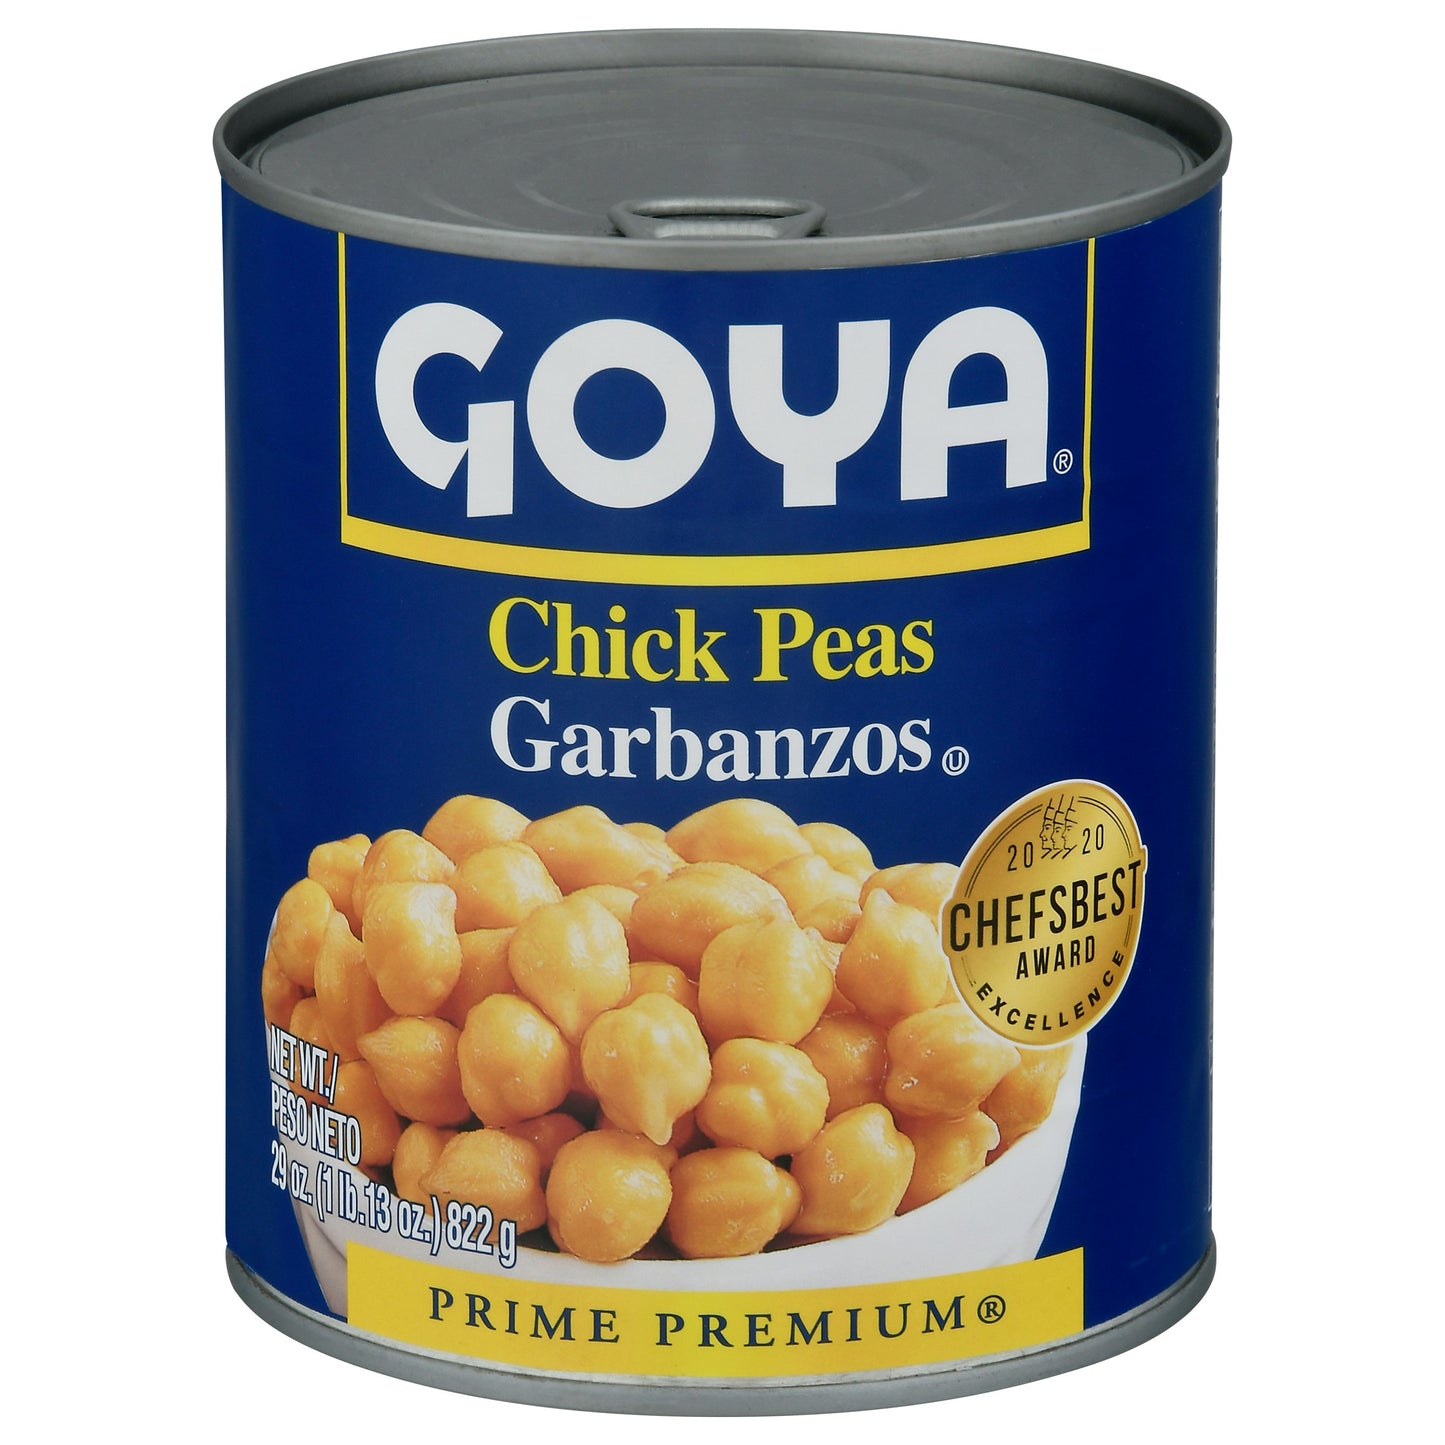 Goya Pea Chick 29 Oz Pack of 12